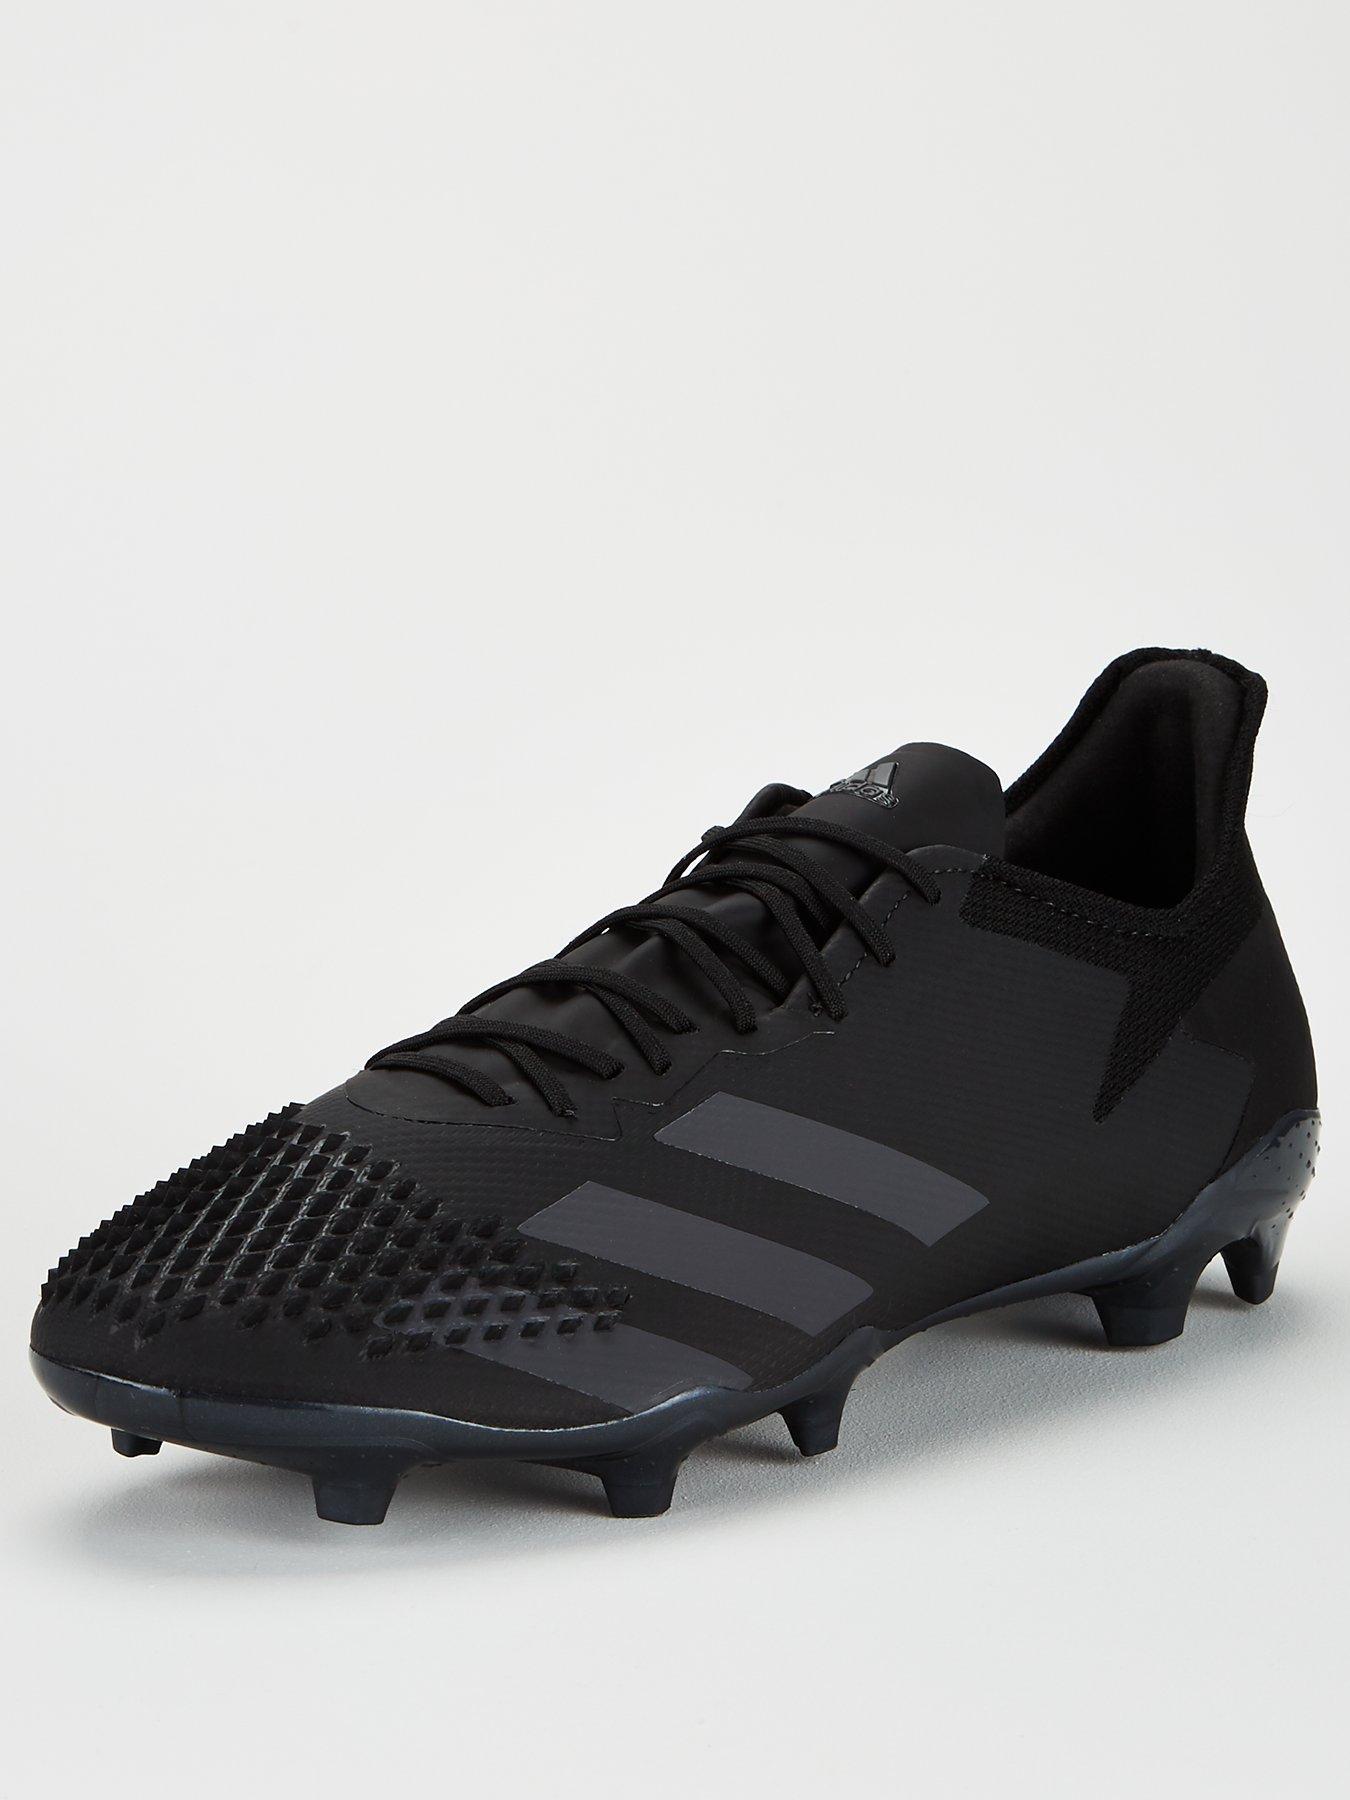 adidas football boots below 1000